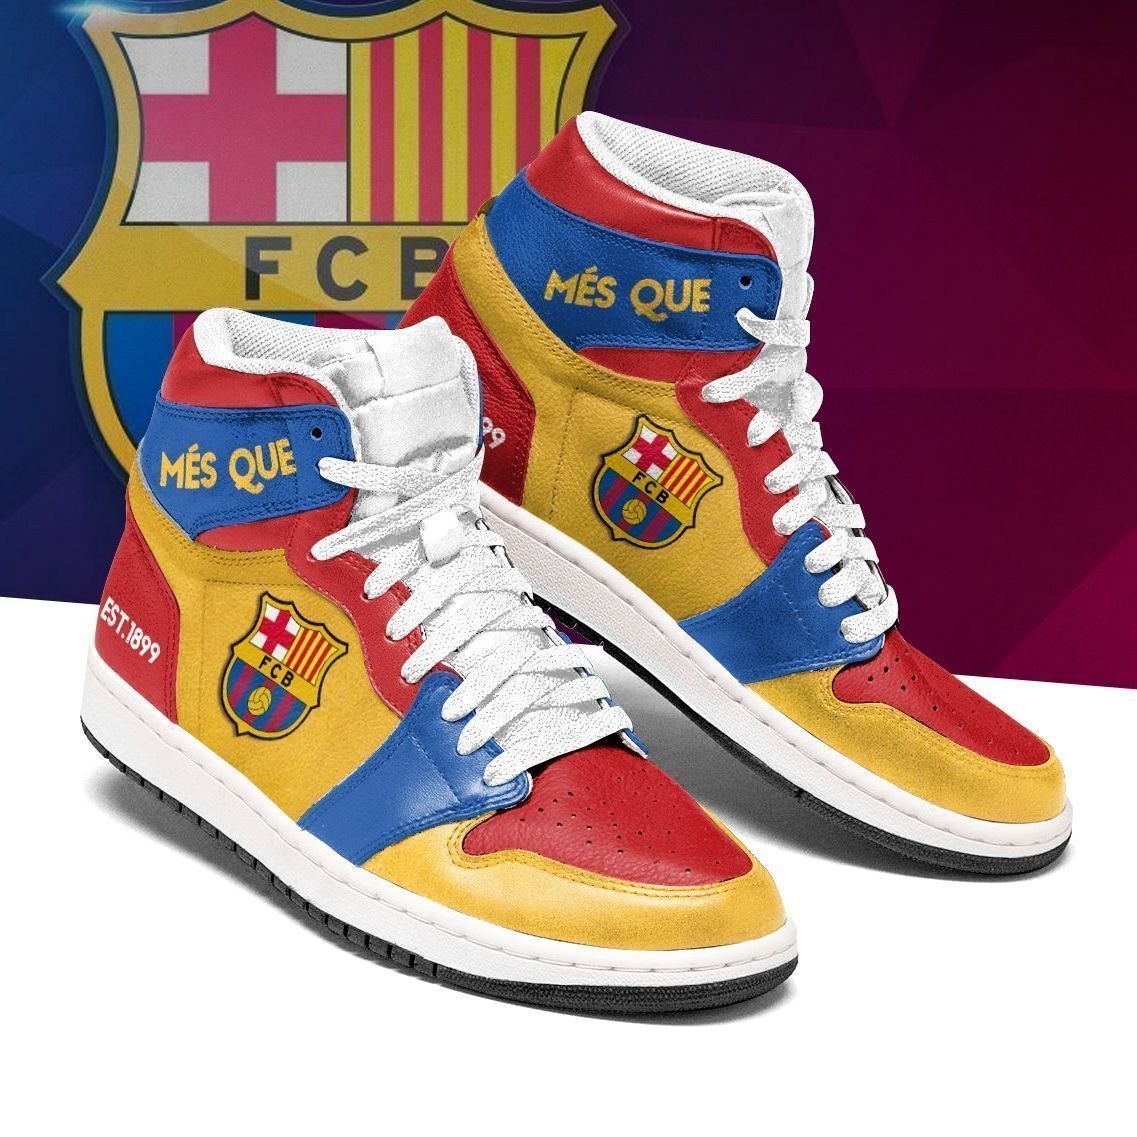 Barcelona jordan sneakers shoes - Picture 1